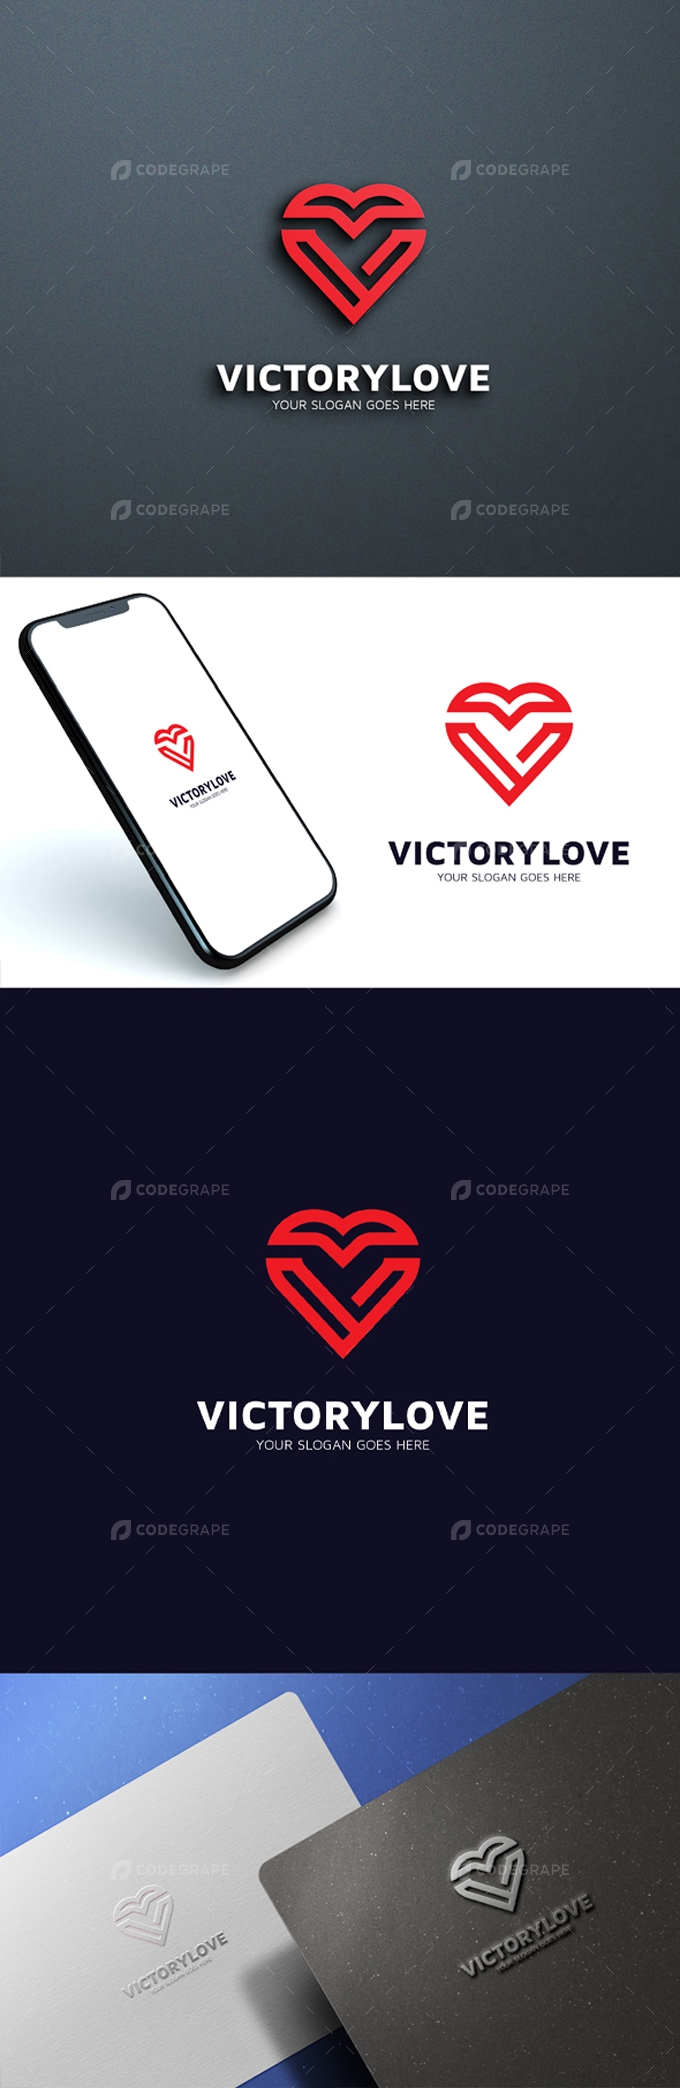 Victory Love - V Letter Logo